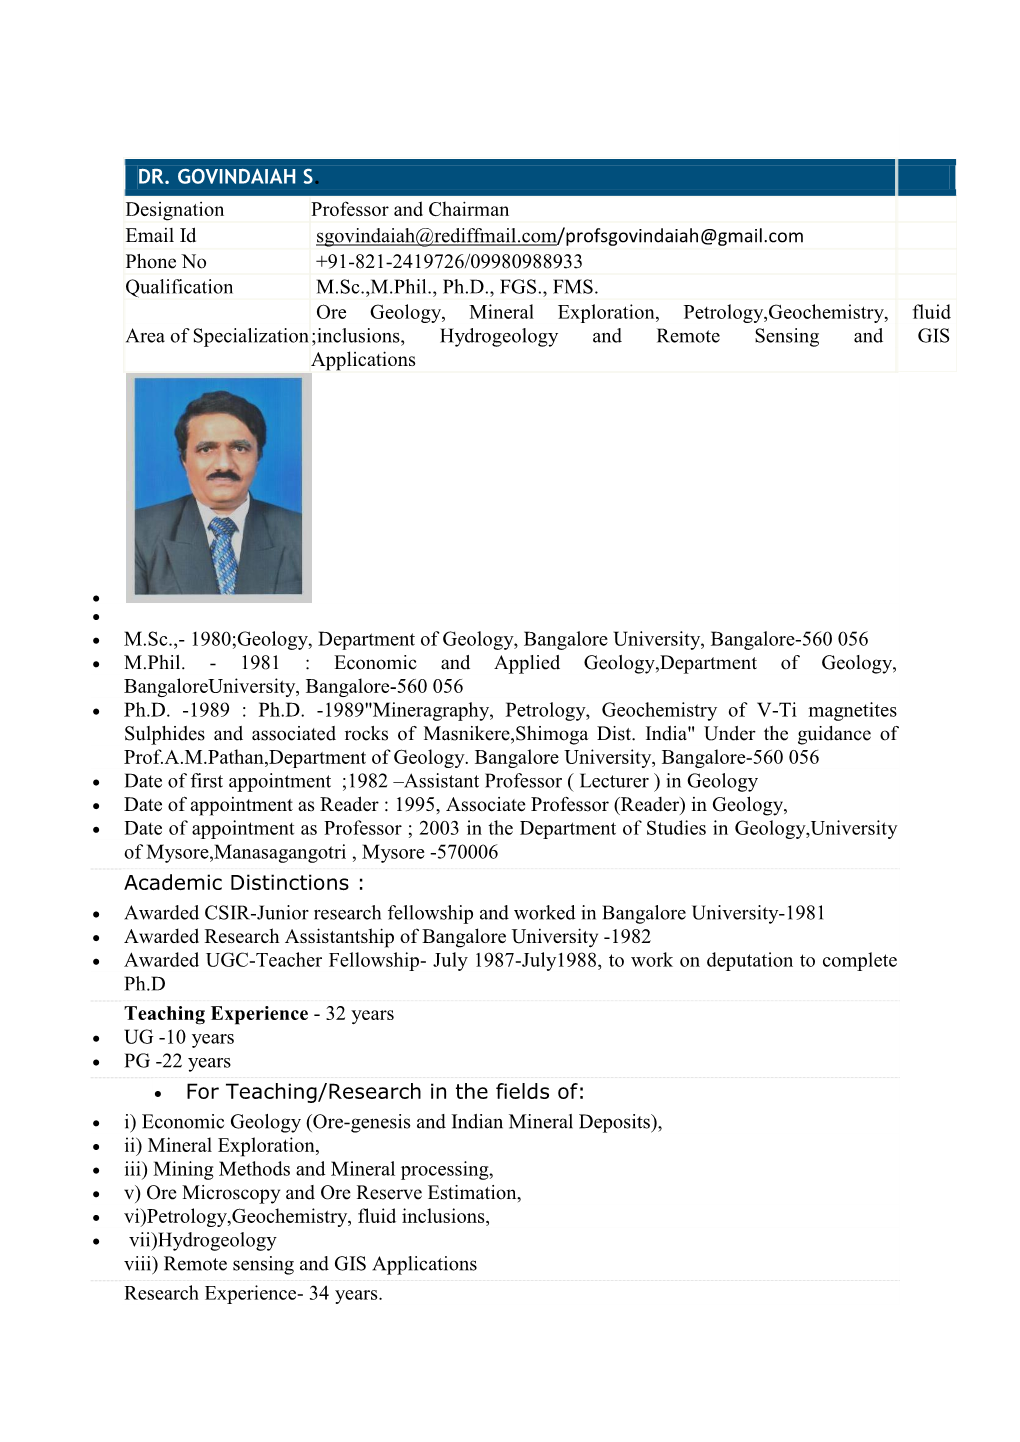 DR. GOVINDAIAH S. Designation Professor and Chairman Email Id